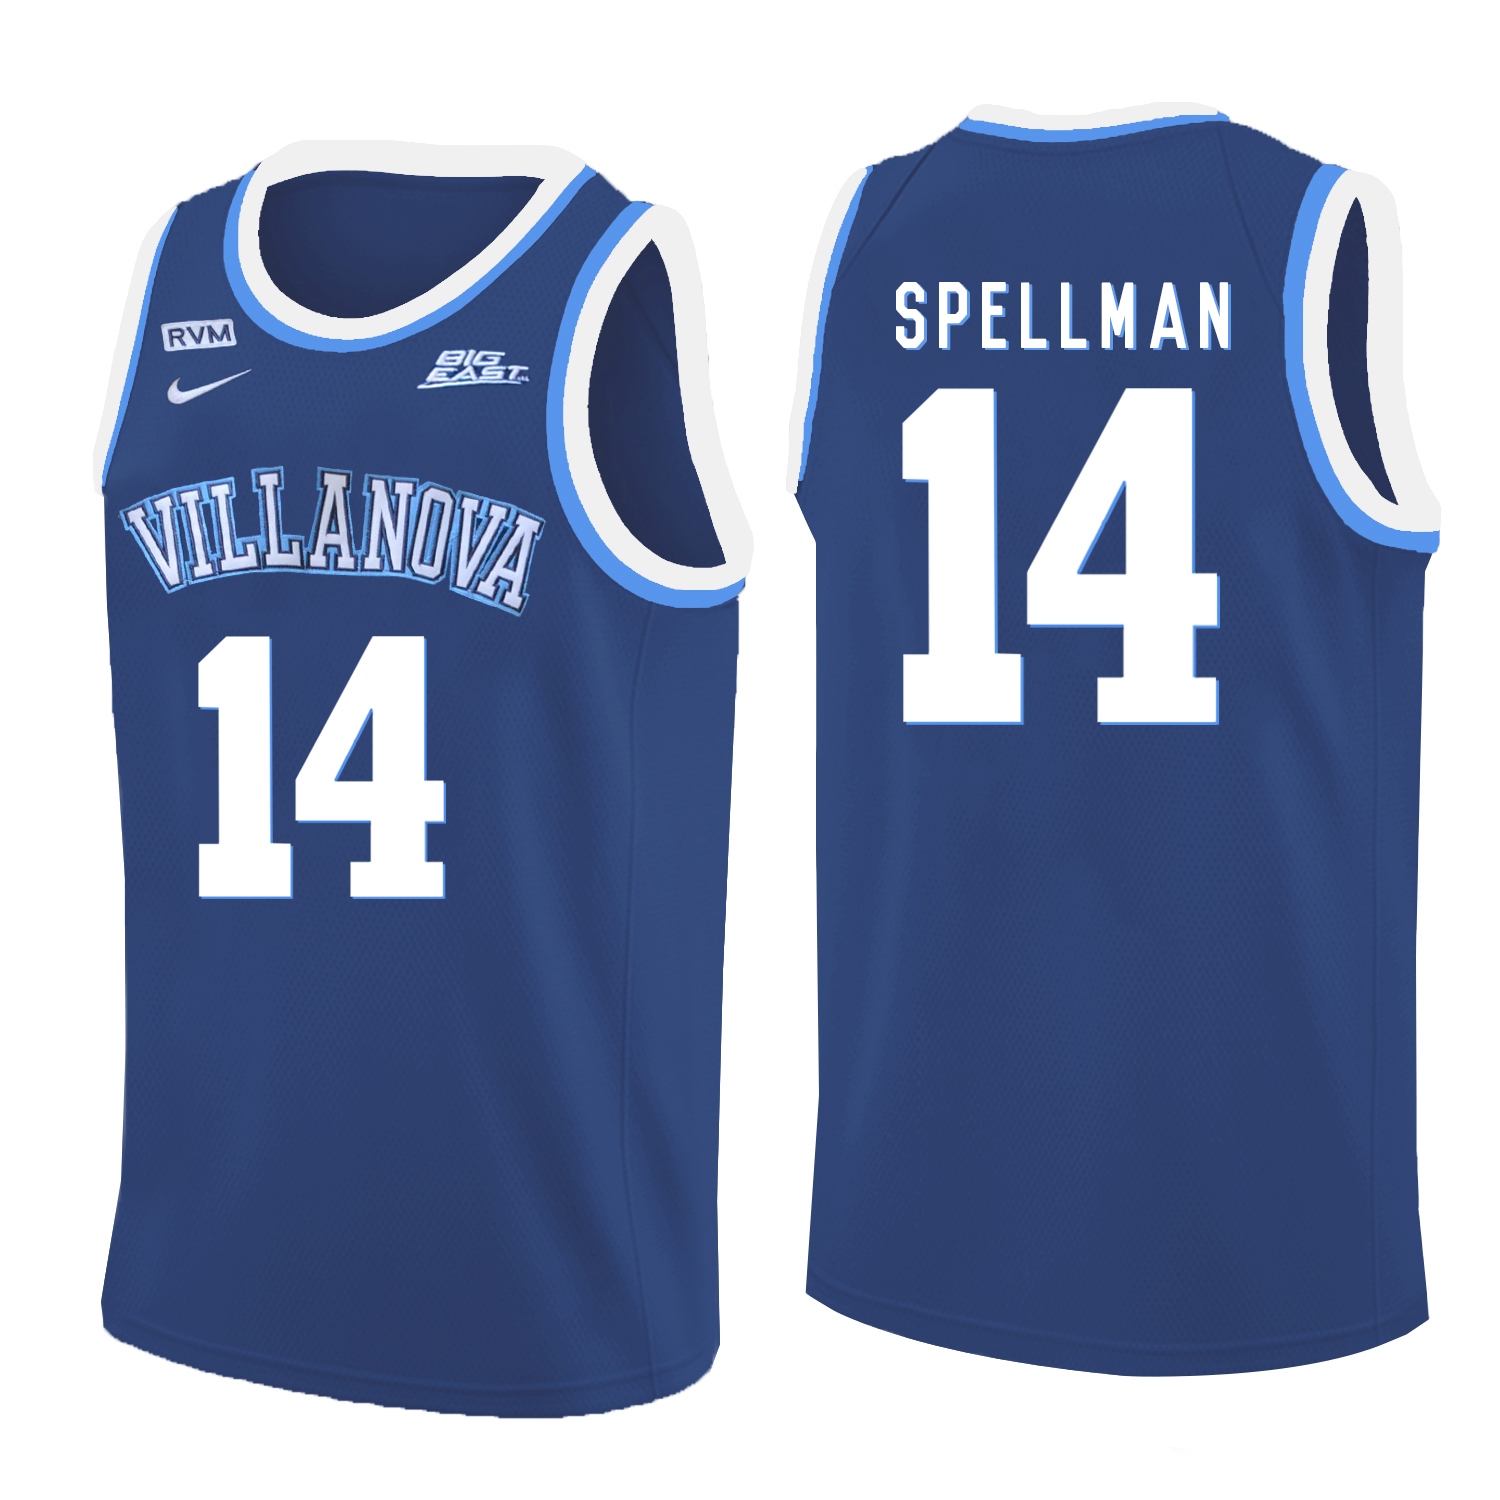 Villanova Wildcats 14 Omari Spellman Blue College Basketball Jersey